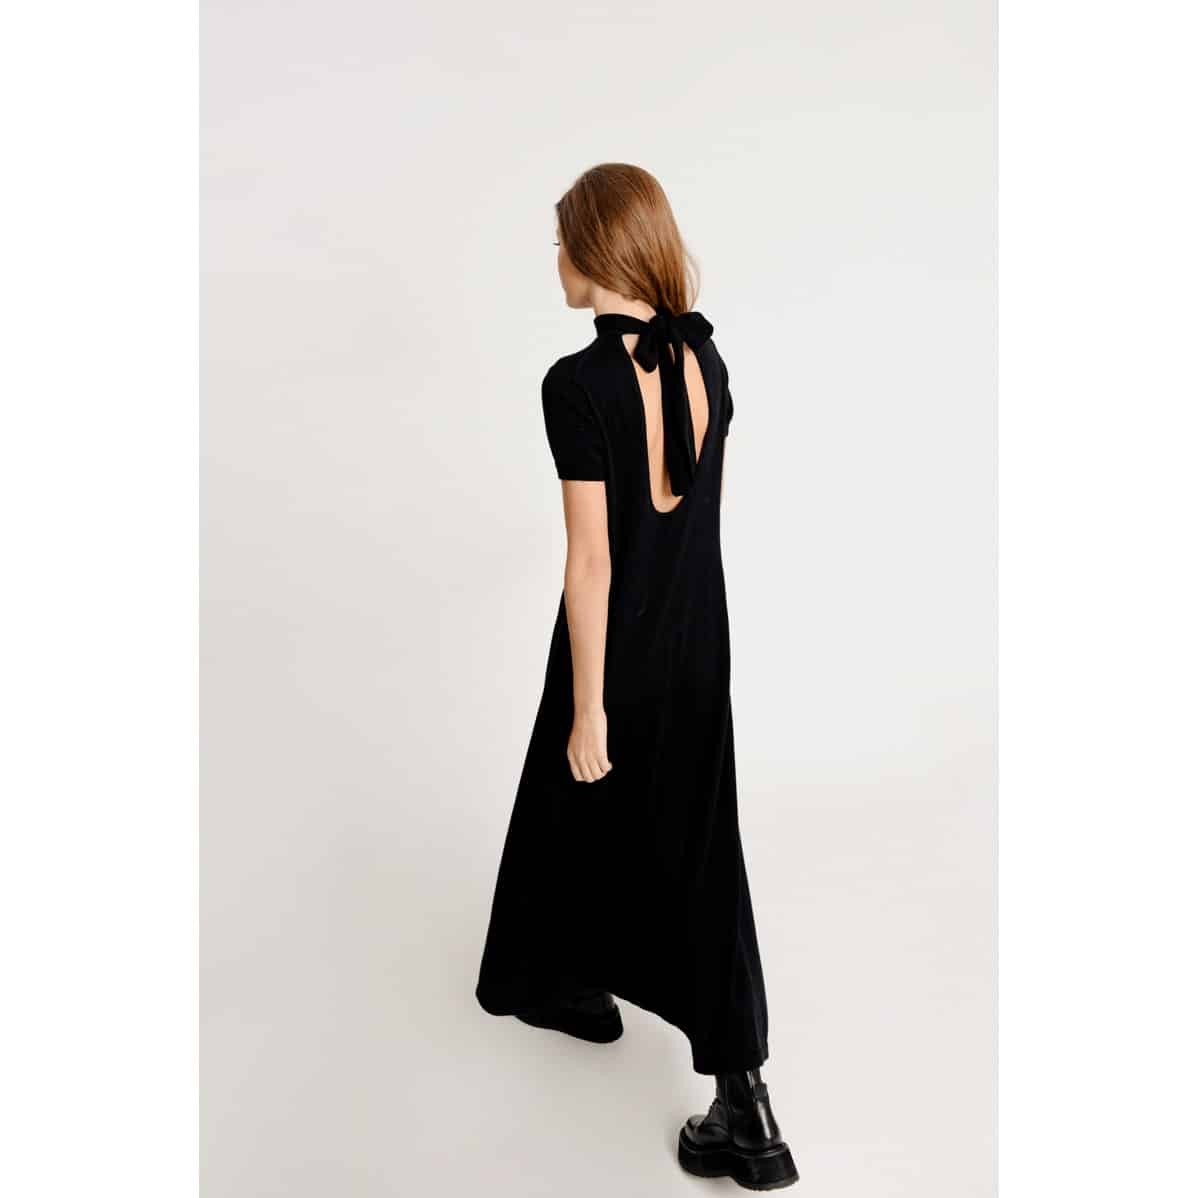 Molly Bracken - Ladies Knitted Dress - Black (2)